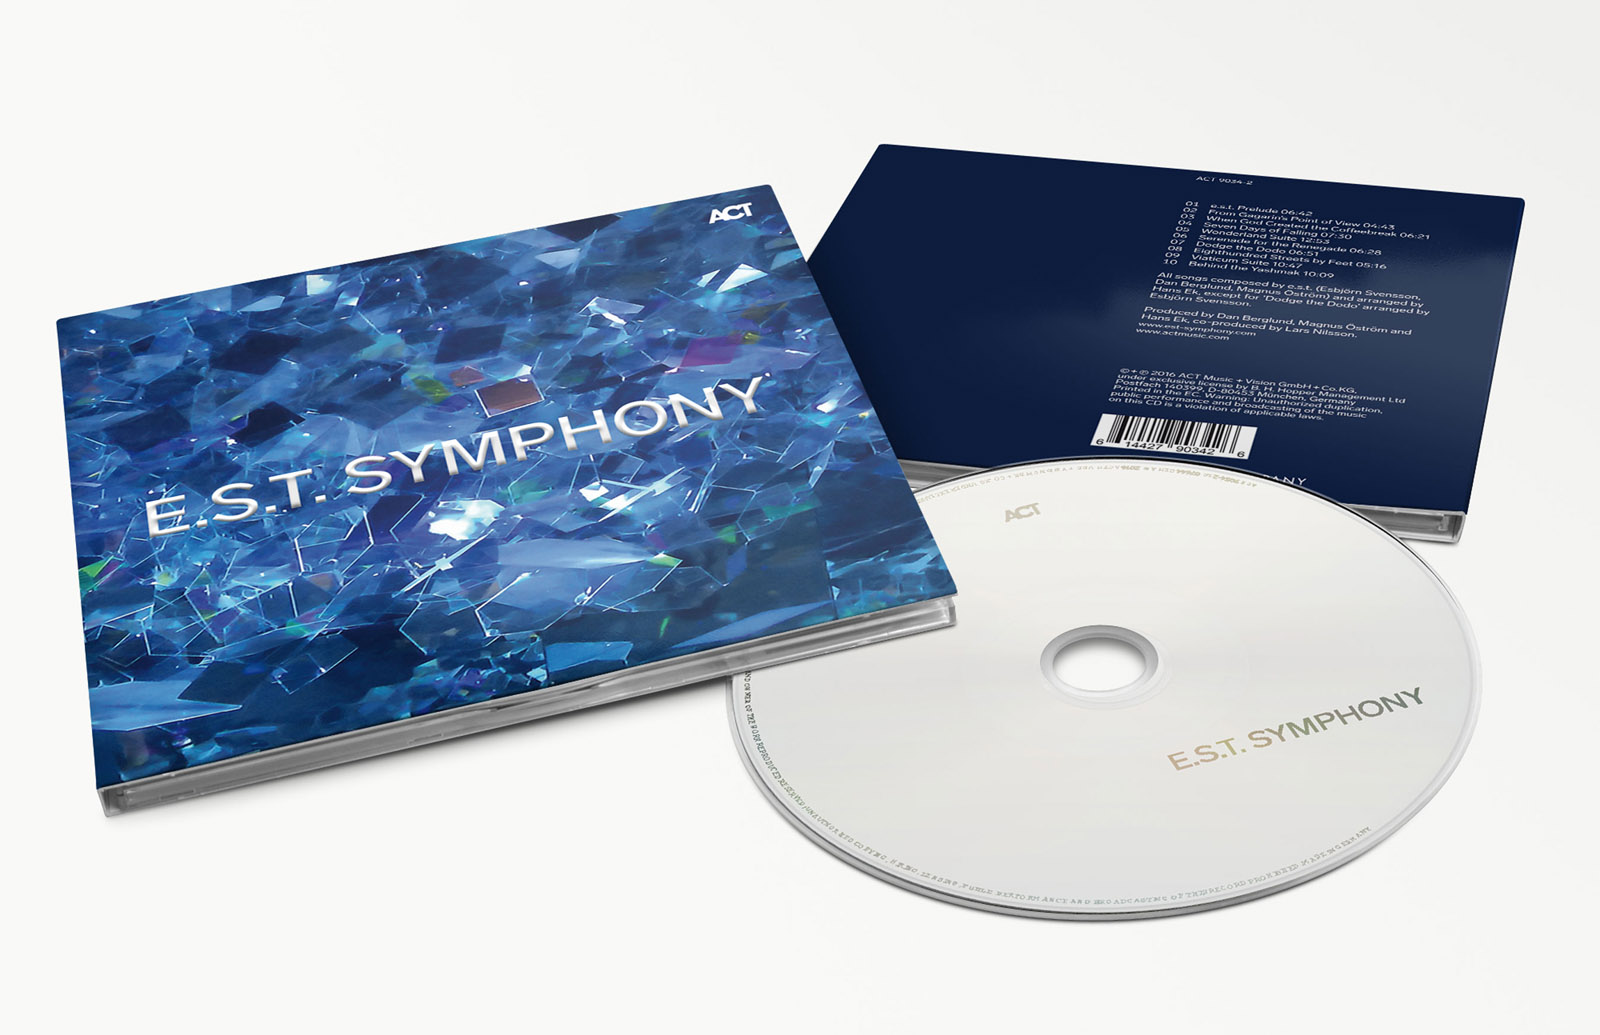 E.S.T. Symphony album